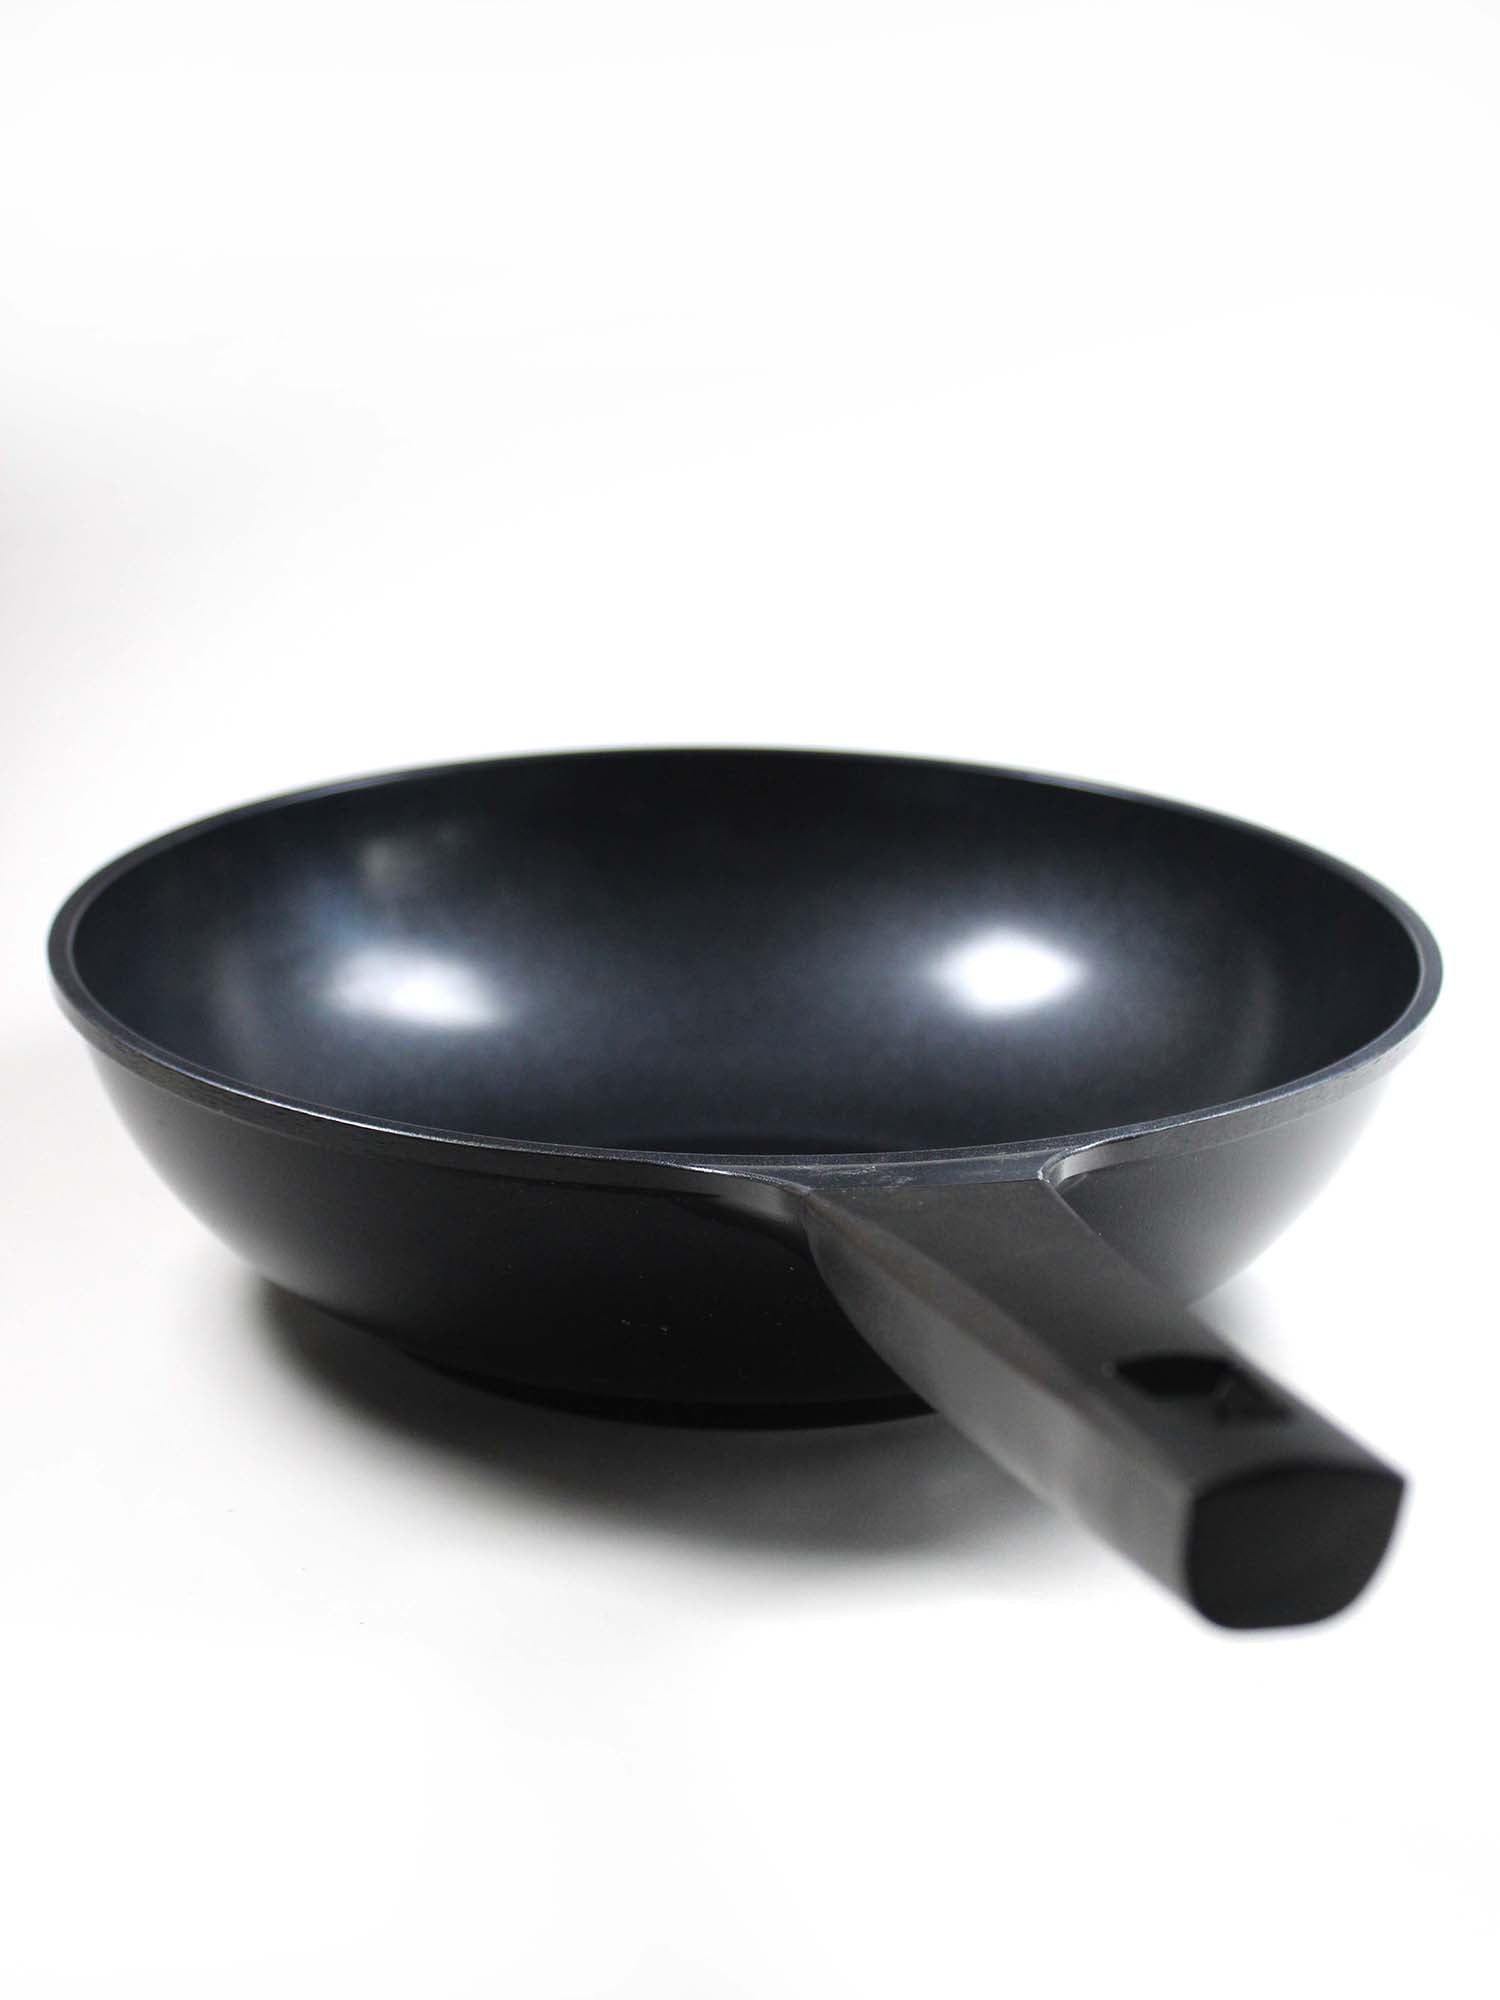 Evaco / Cast Non-stick Ceramic Fry Pan